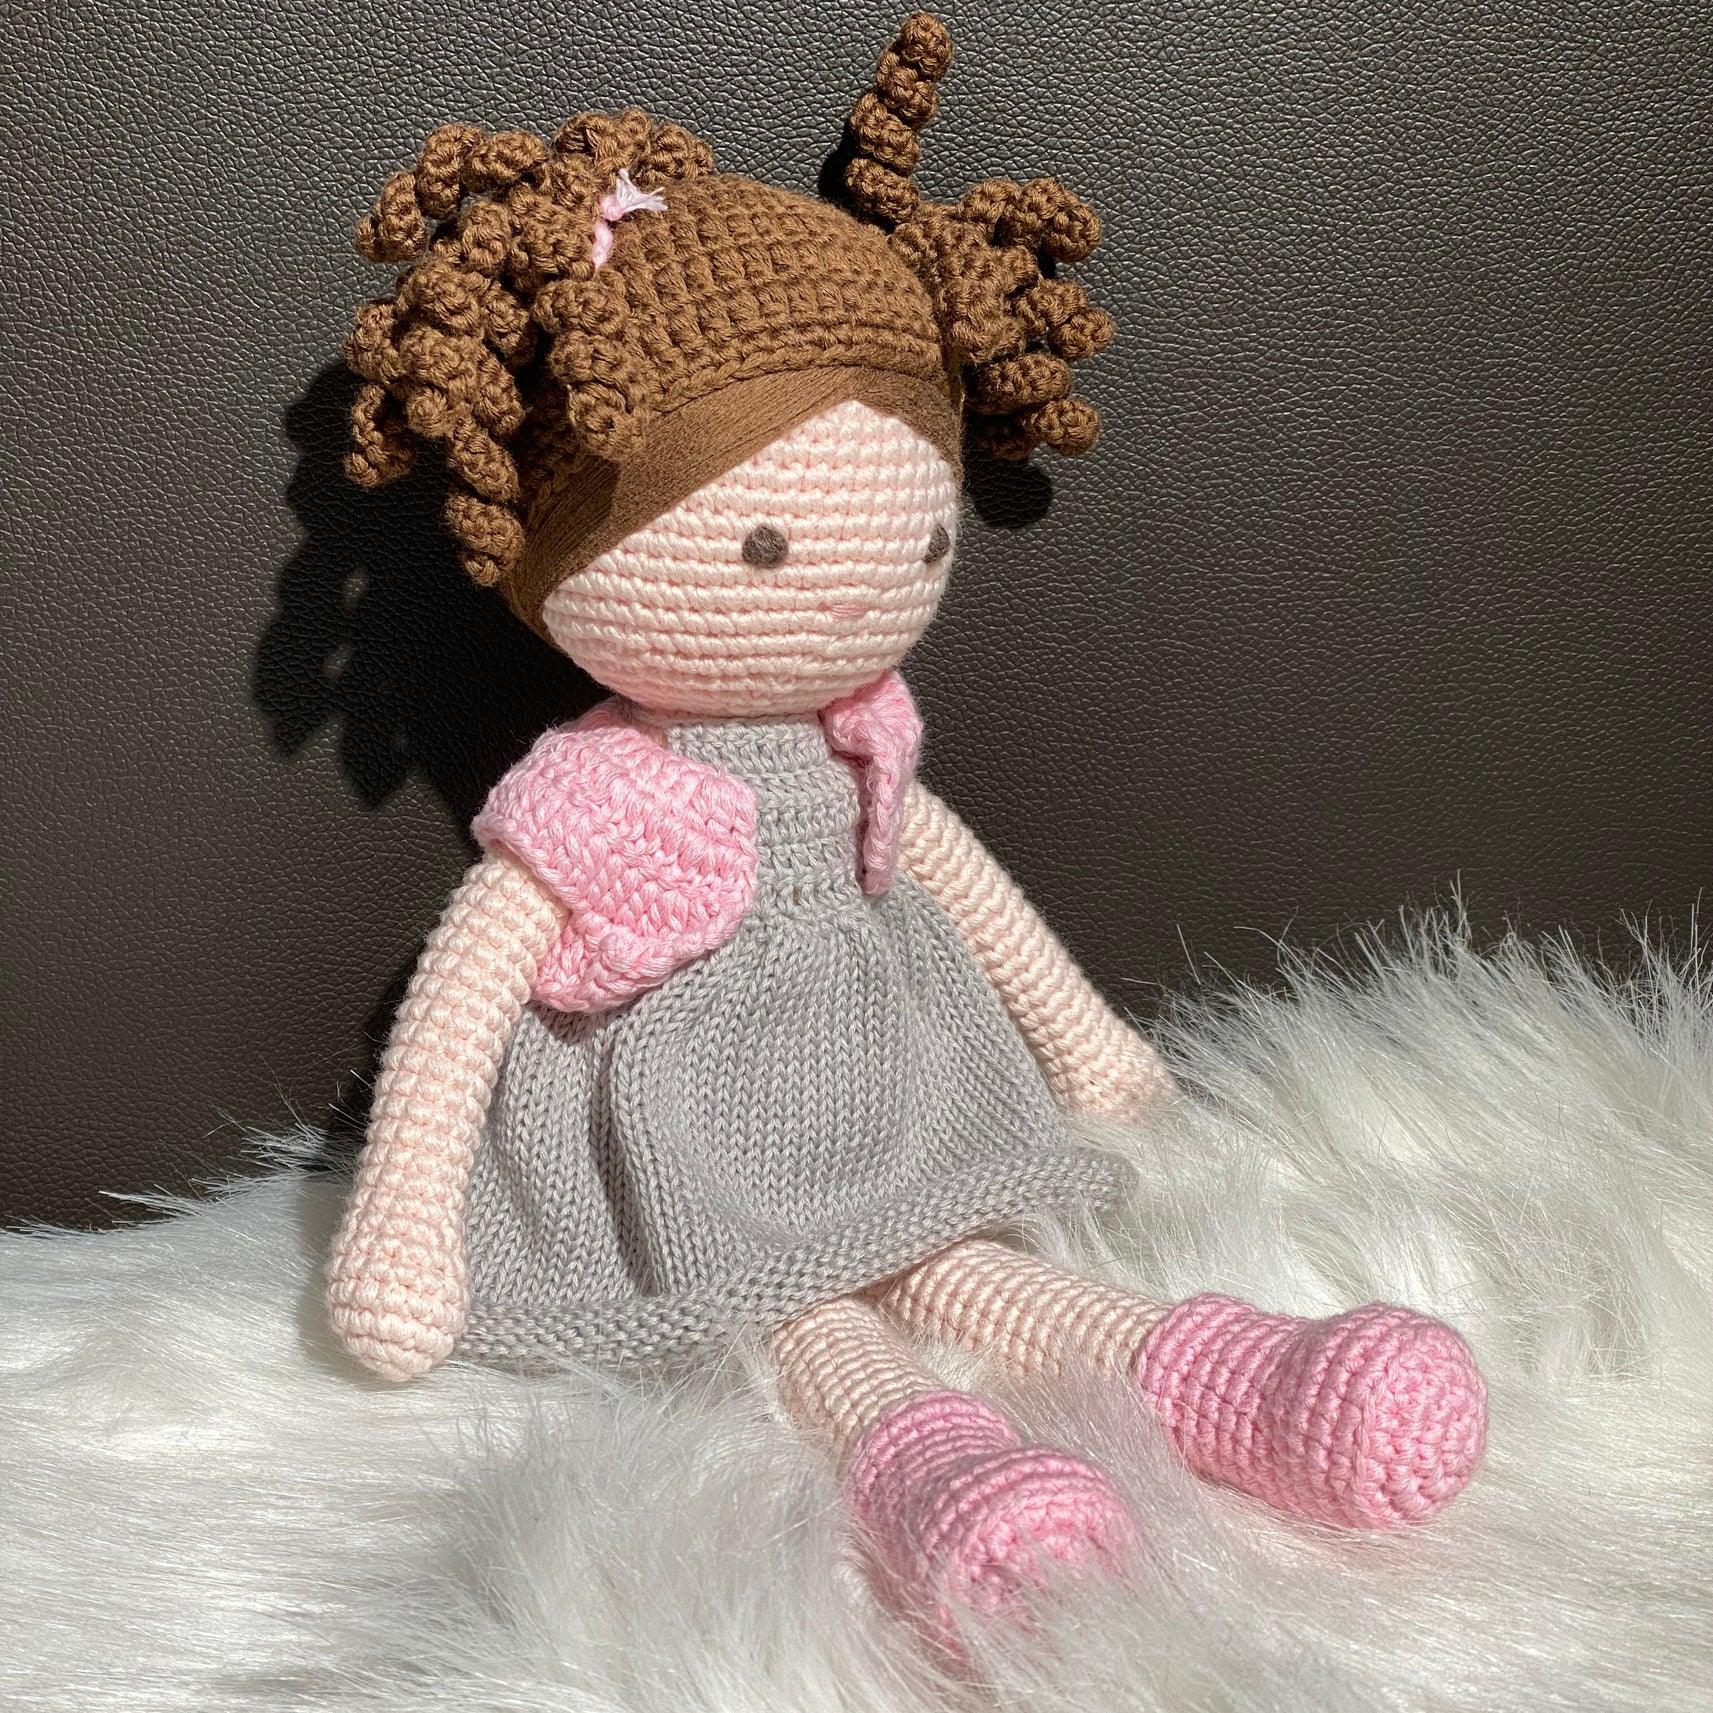 May's Hand Grey Dress Girl Crochet - Kids Haven